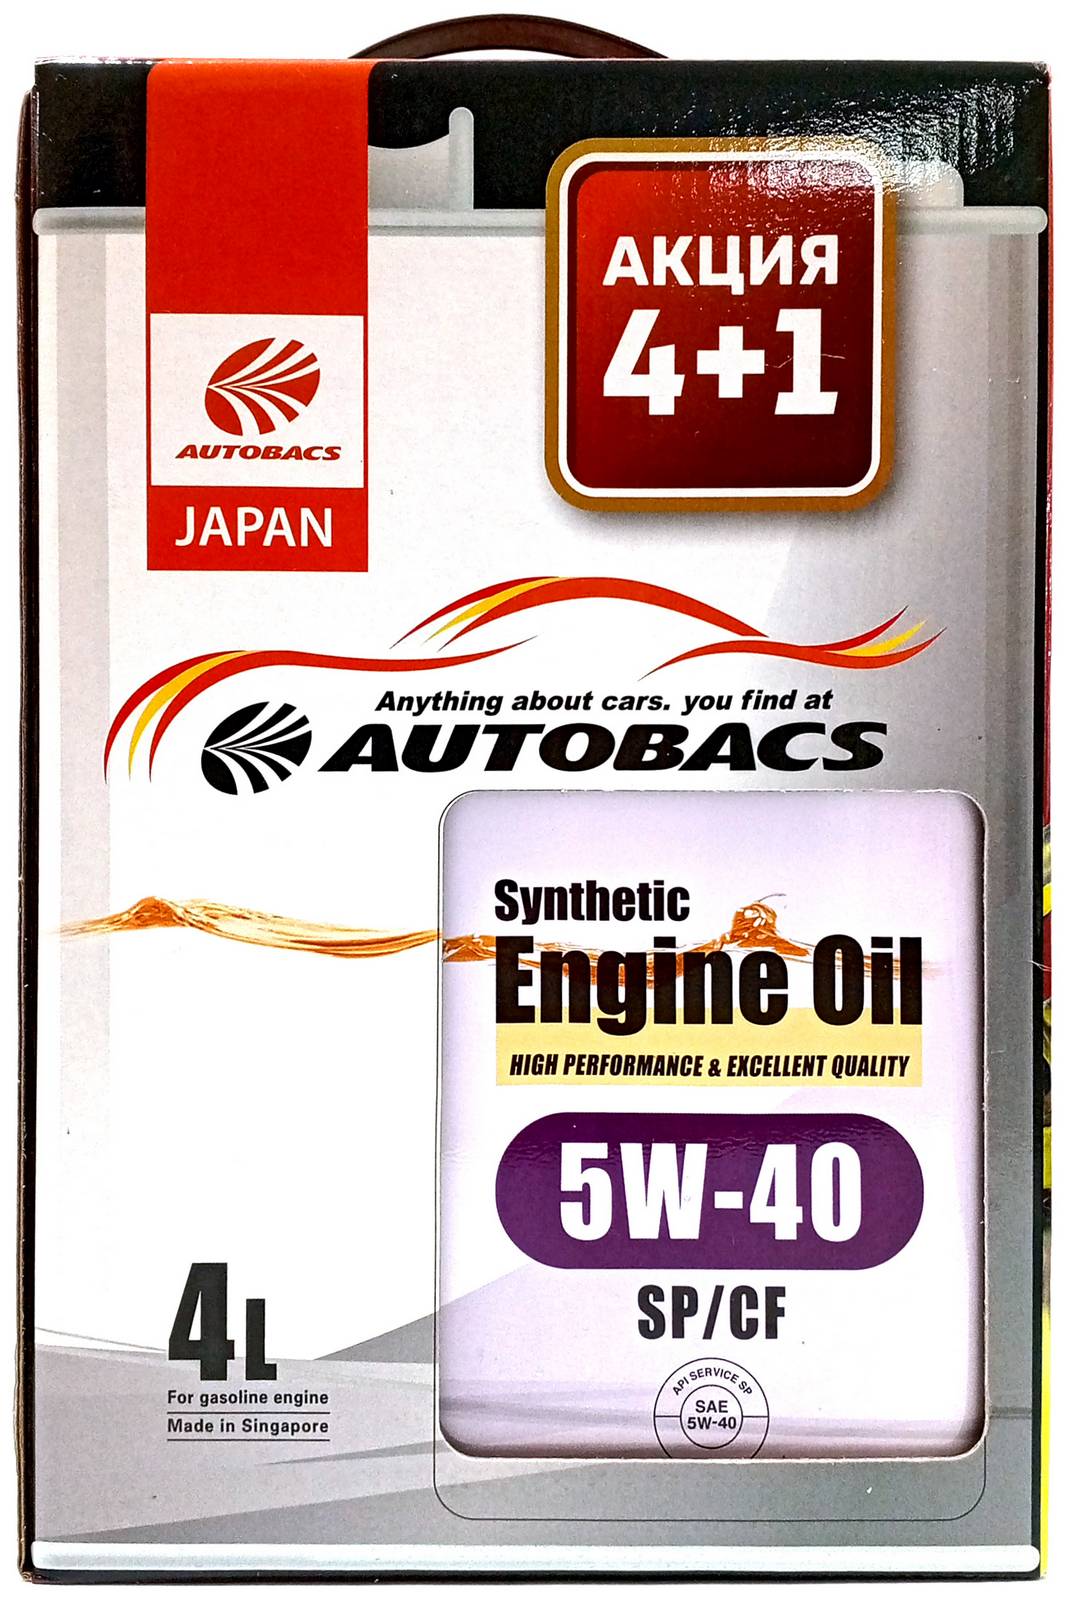 АВТОМАСЛА Моторное масло AUTOBACS ENGINE OIL FS 5W40 SP/CF 4+1 АКЦИЯ